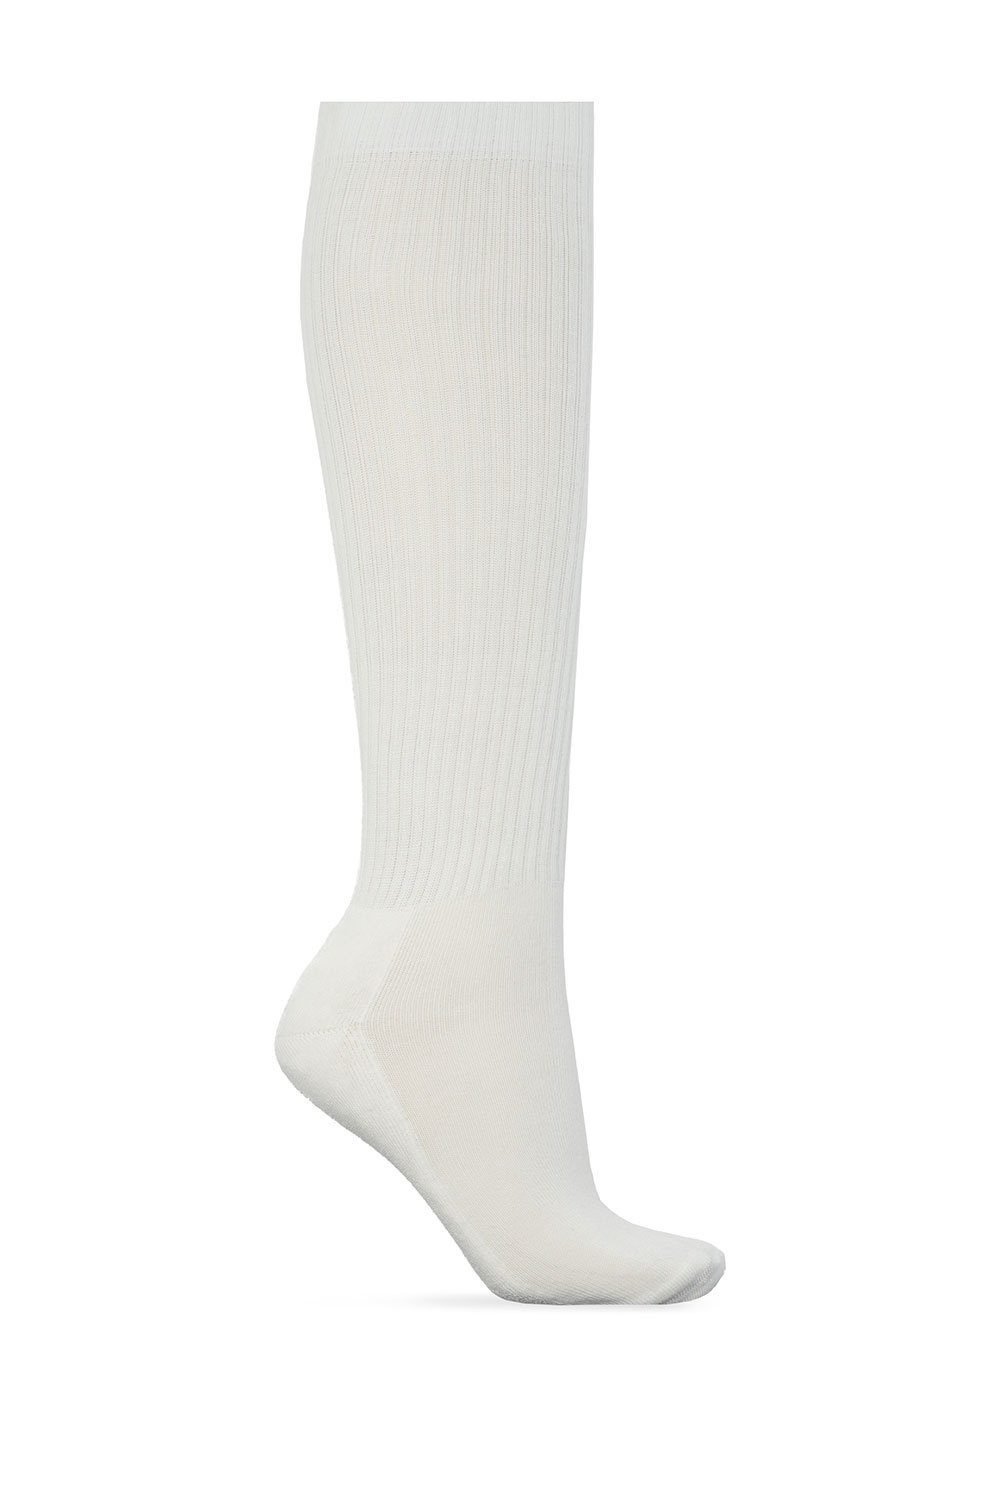 Rick Owens Cotton socks